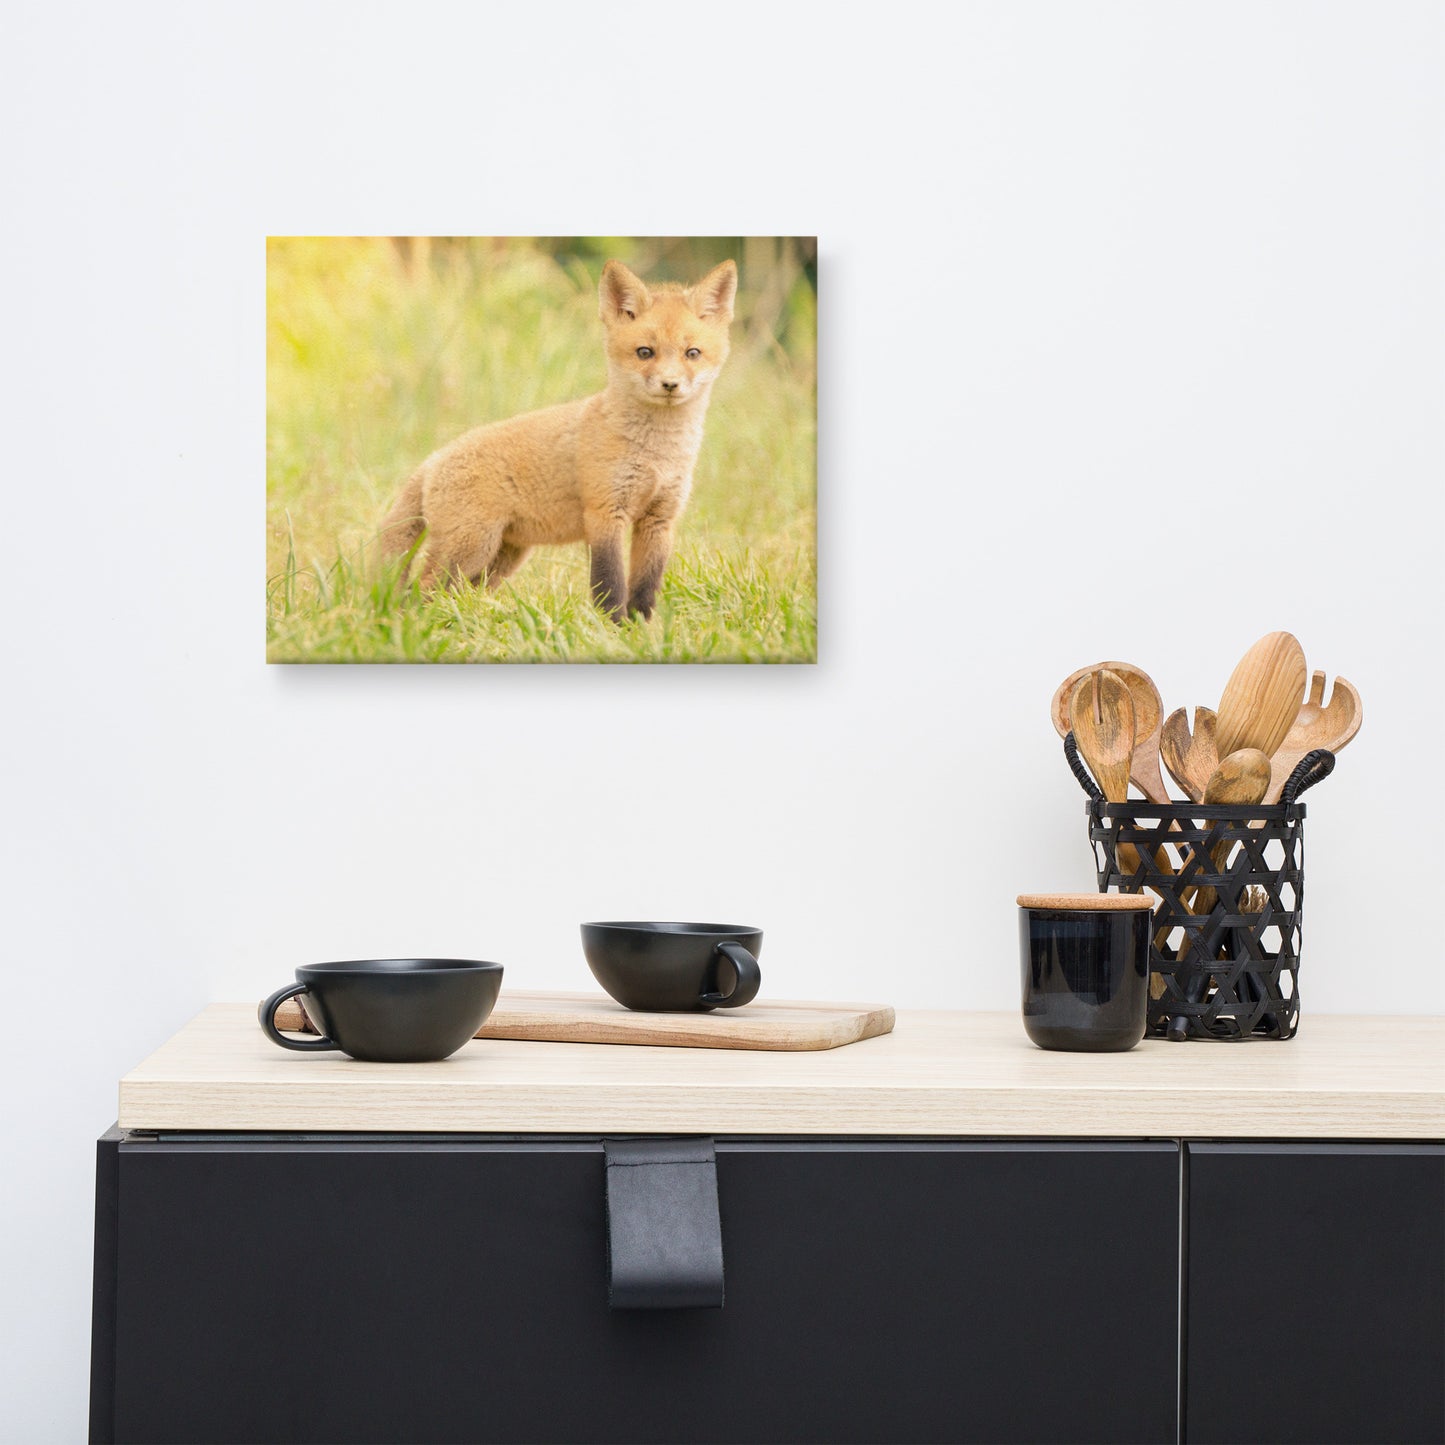 Nursery Decor Canvas: Baby Red Fox in the Sun Animal / Wildlife / Nature Photograph Canvas Wall Art Print - Artwork